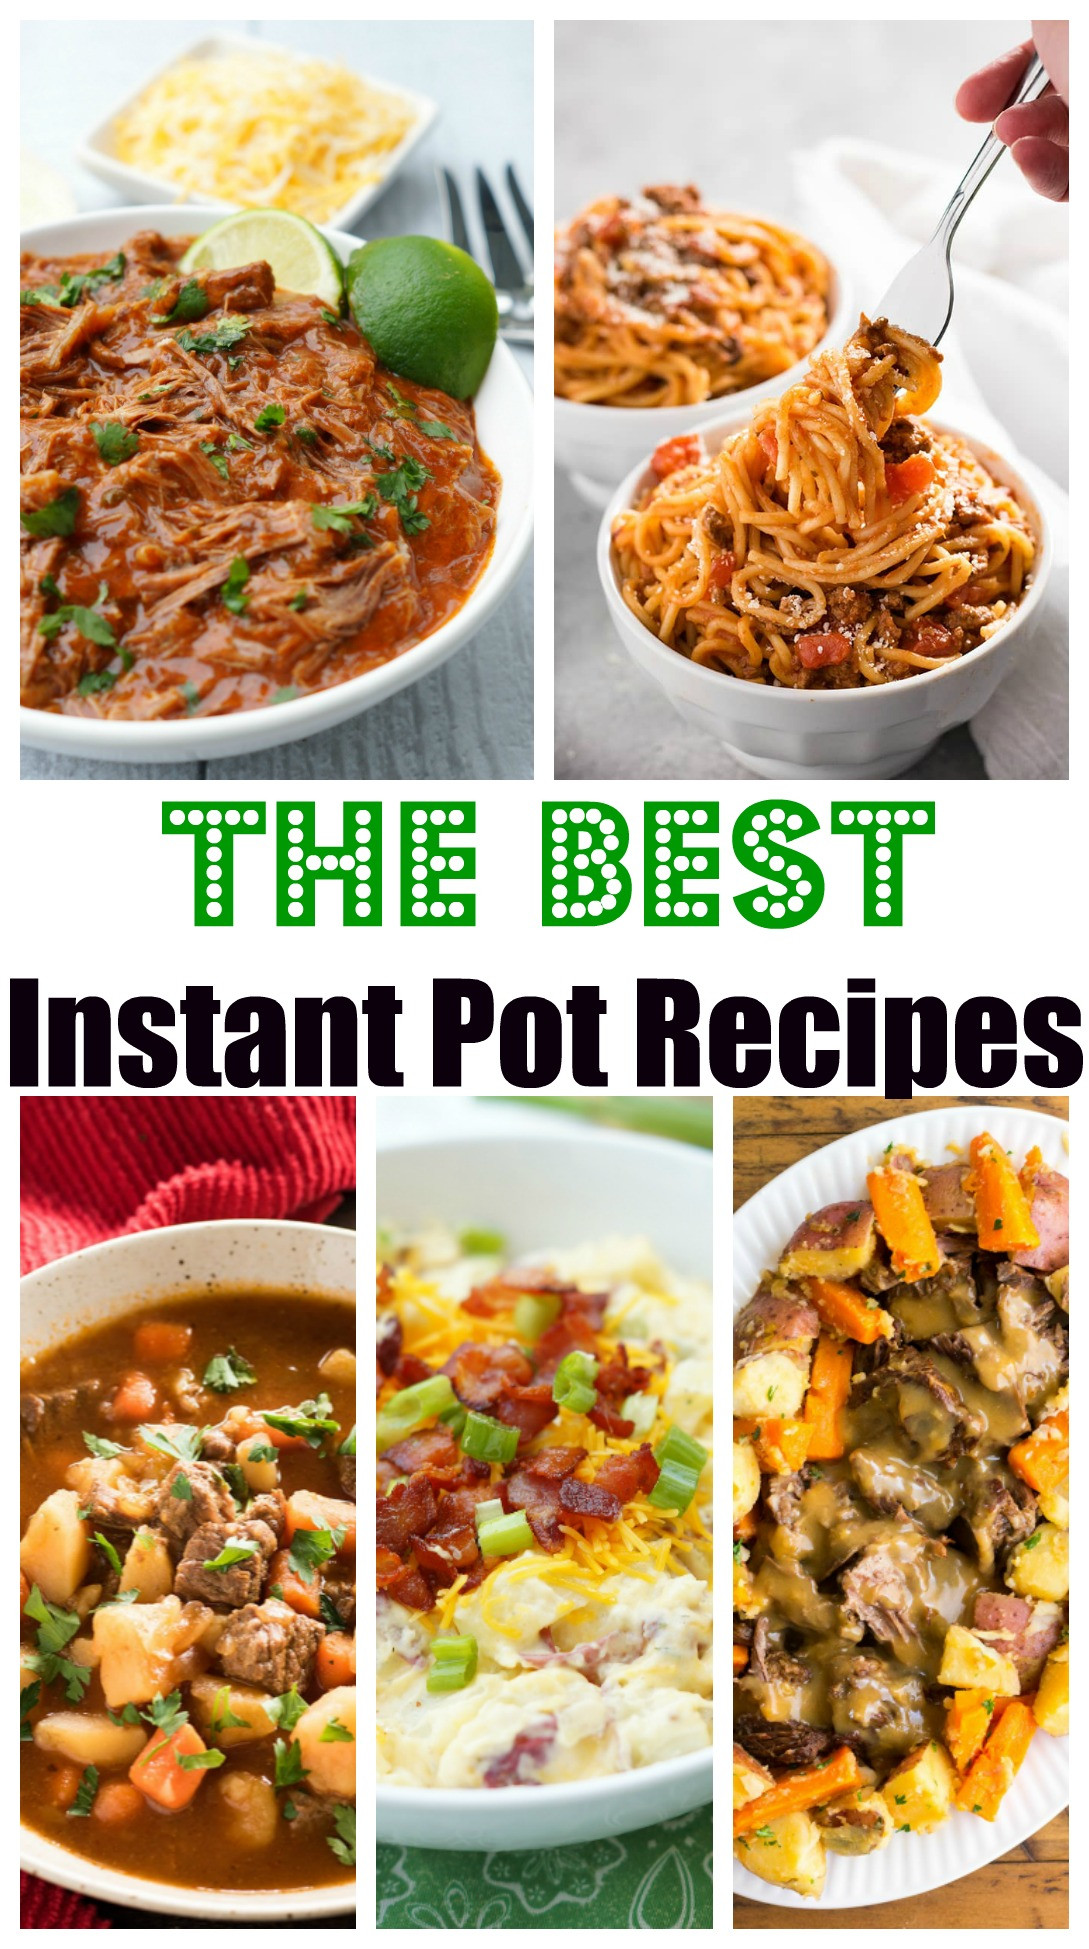 Best Recipes For Instant Pot
 The Best Instant Pot Recipes